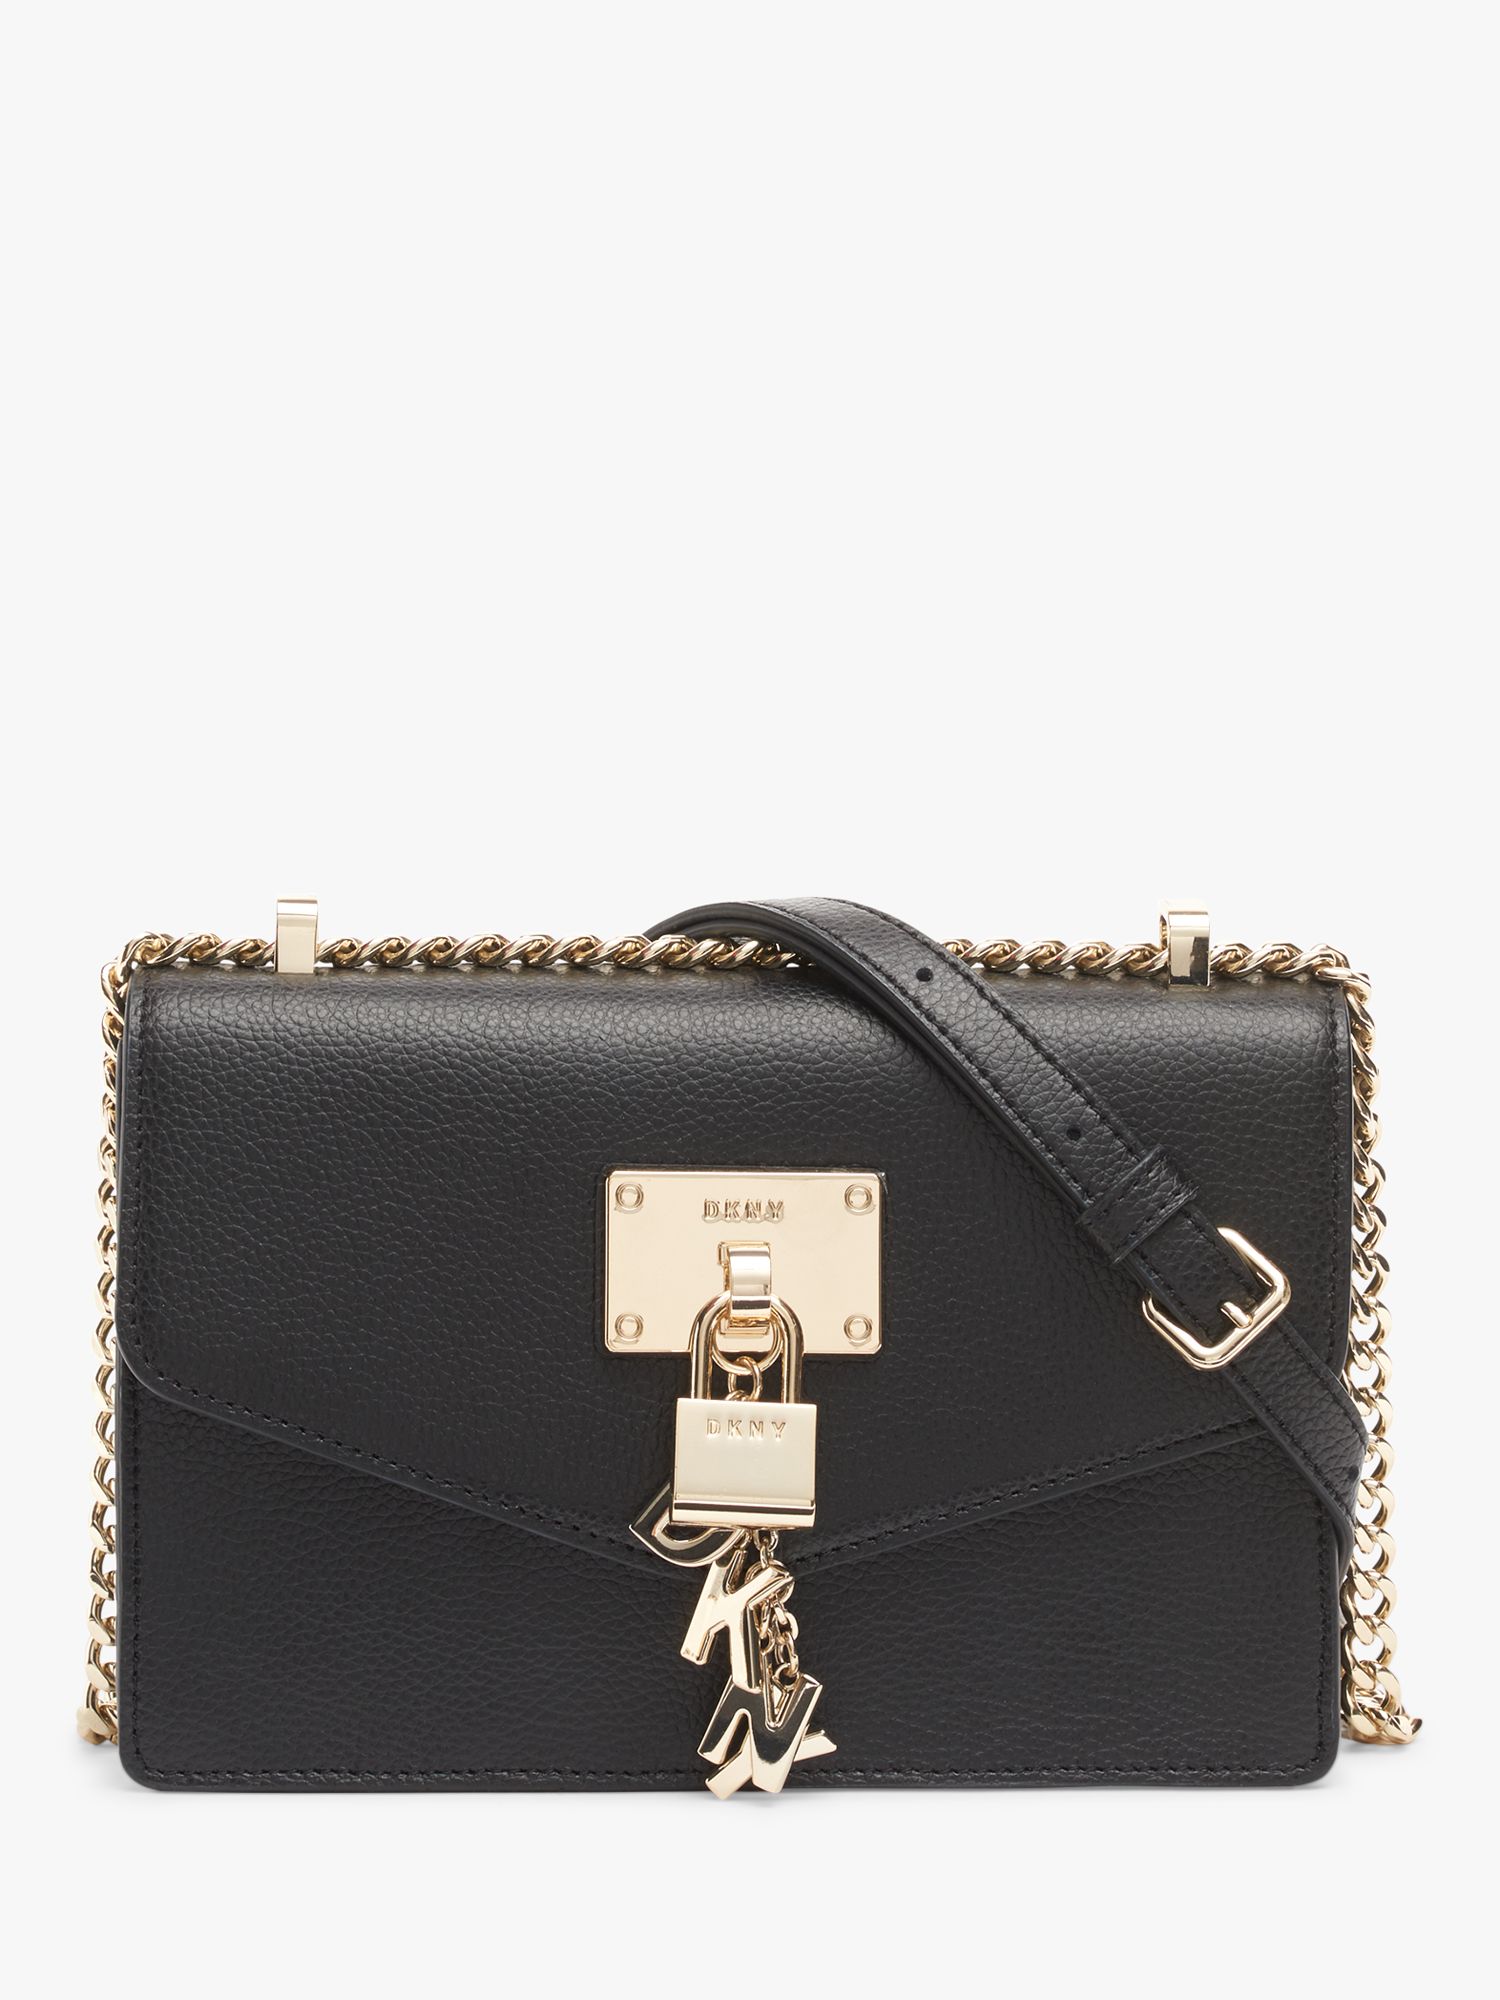 DKNY Elissa Pebble Leather Cross Body Bag, Black